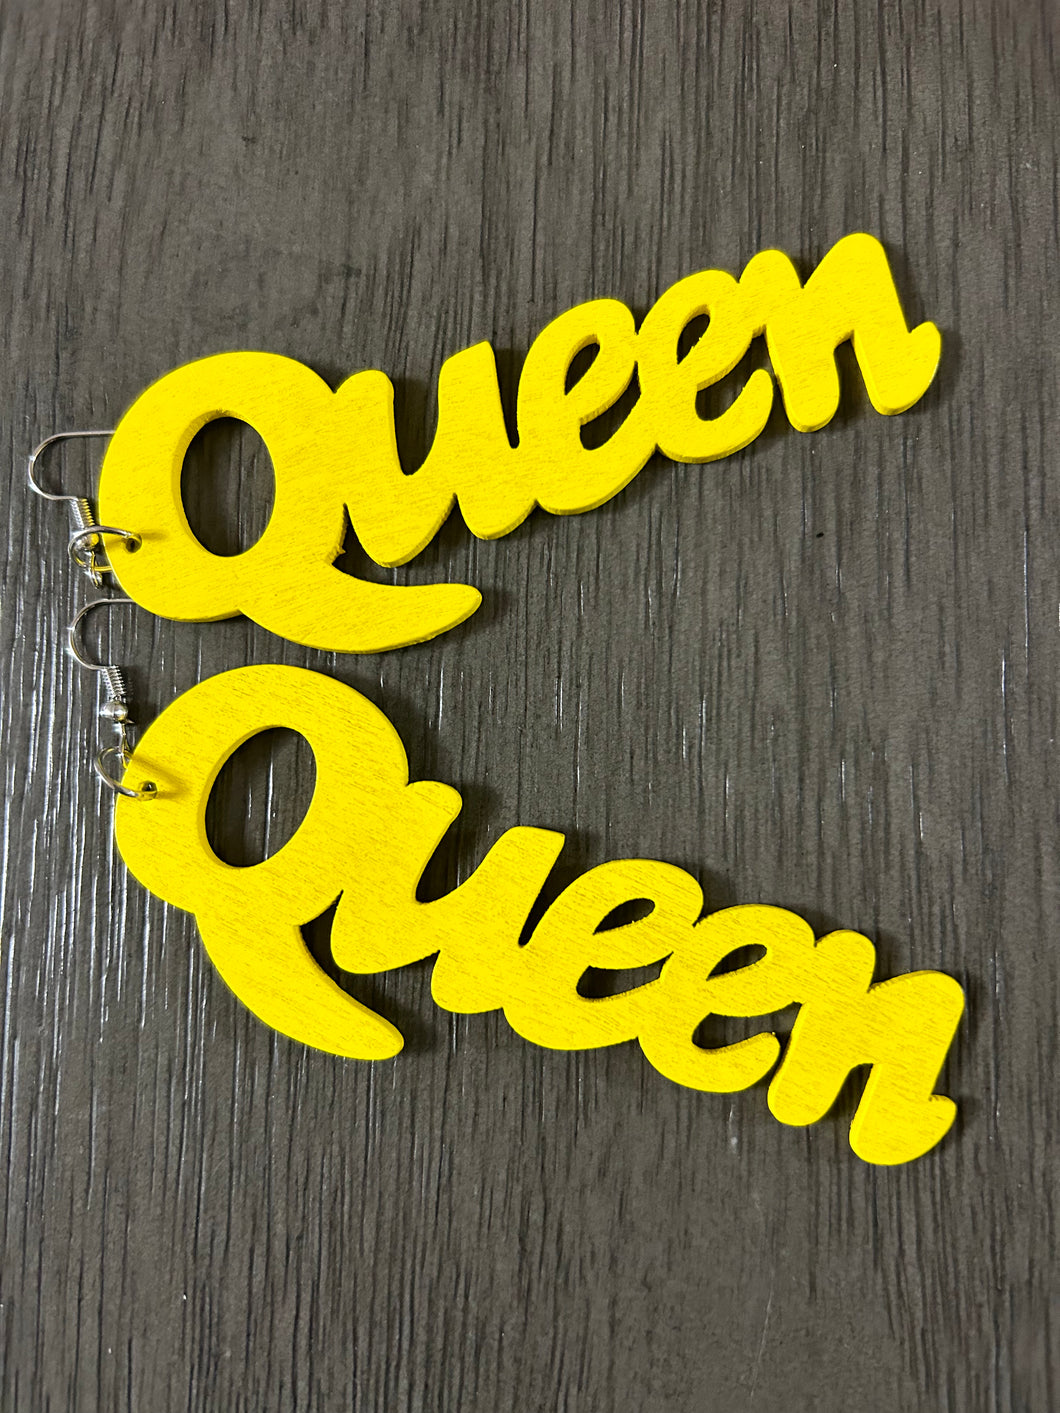 Queen Wood Earrings